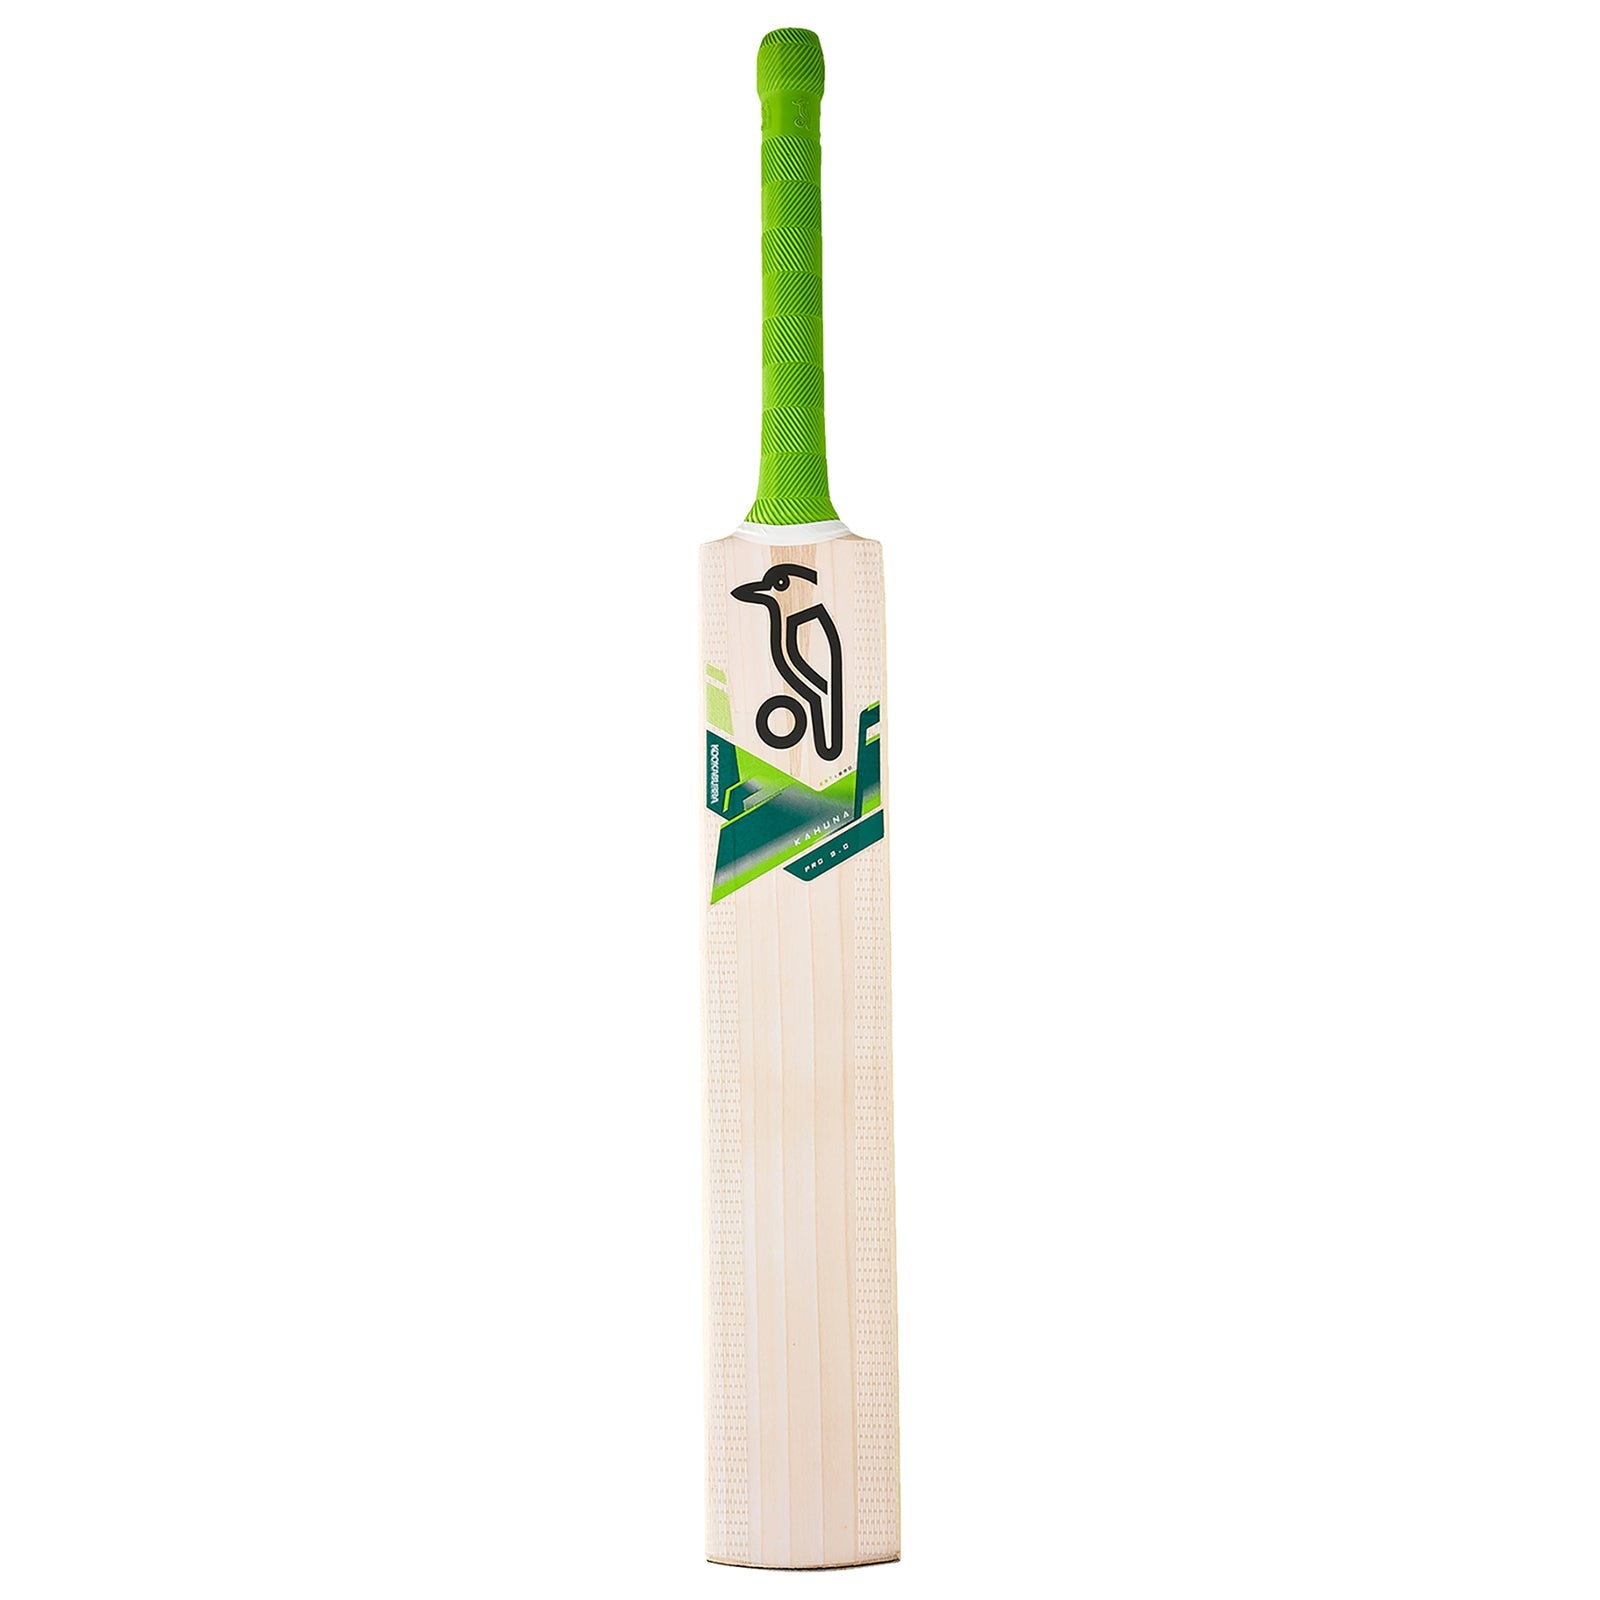 Kookaburra Kahuna Pro 9.0 Kashmir Willow Cricket Bat - Size 4